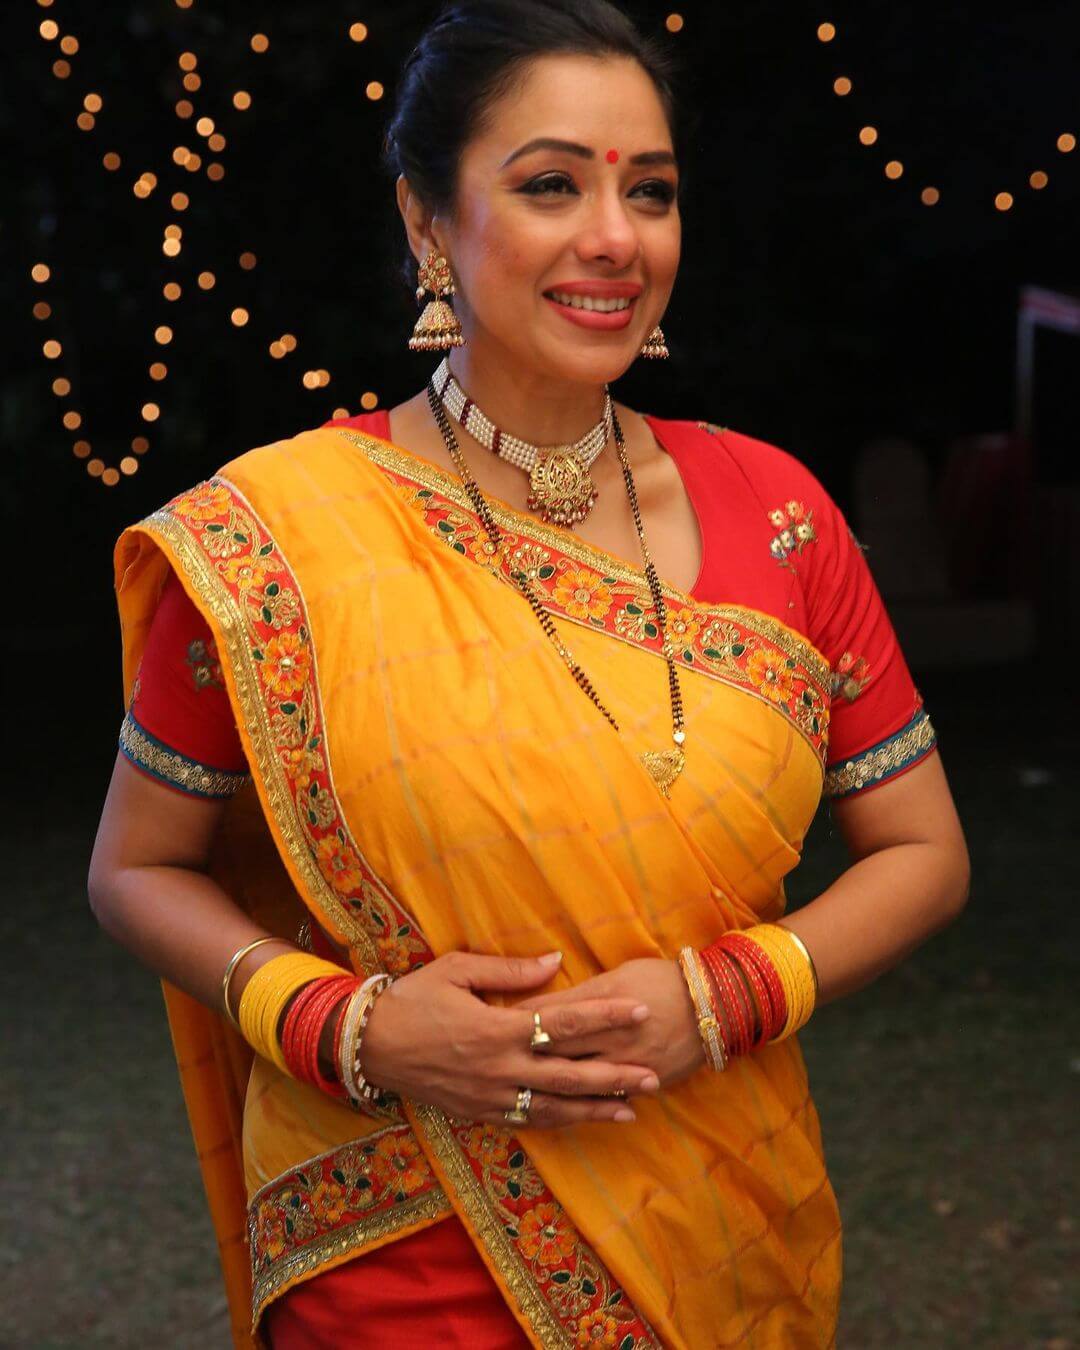 Sarabhai Vs Sarabhai Actress Rupali Ganguly In Traditional Yellow And Red Saree